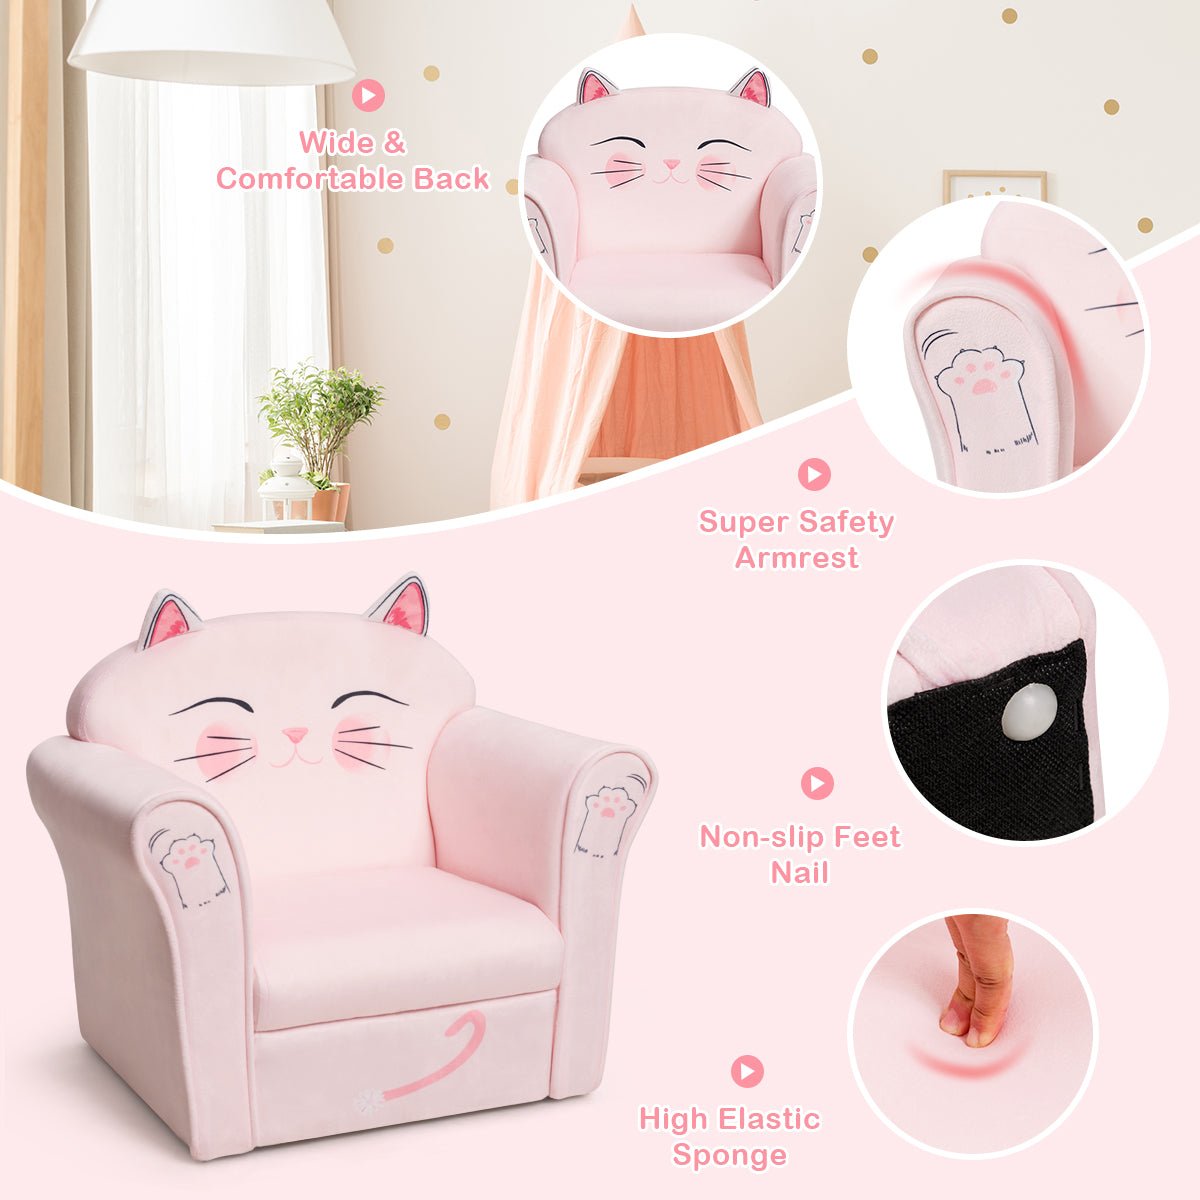 Cat Pattern Kids Armchair: Wooden Frame Comfort for Baby's Nursery